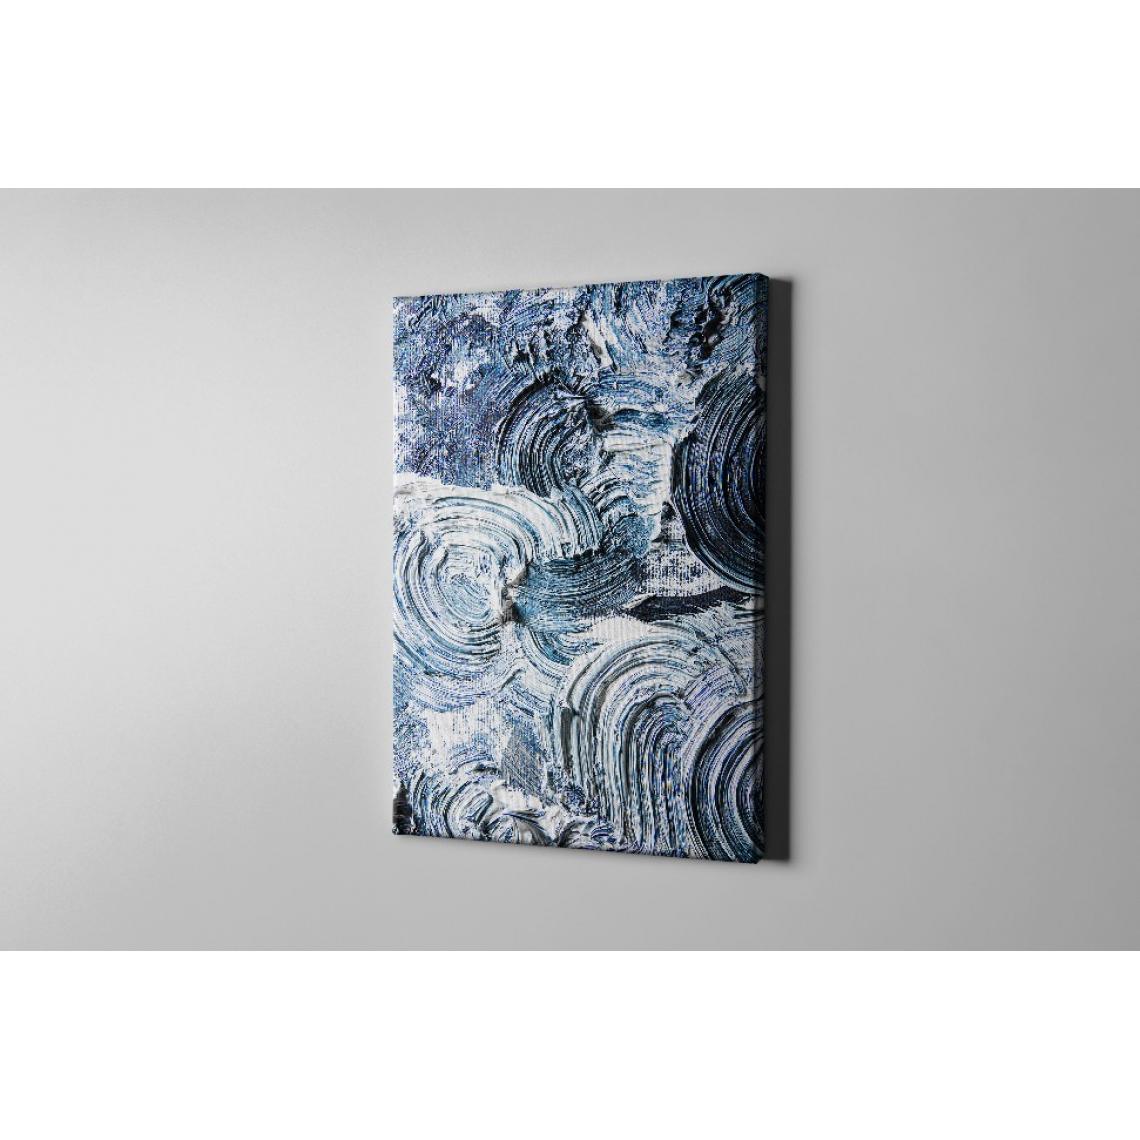 Homemania - HOMEMANIA Tableau sur toile Mer - Bleu, blanc - 100 x 3 x 150 cm - Tableaux, peintures